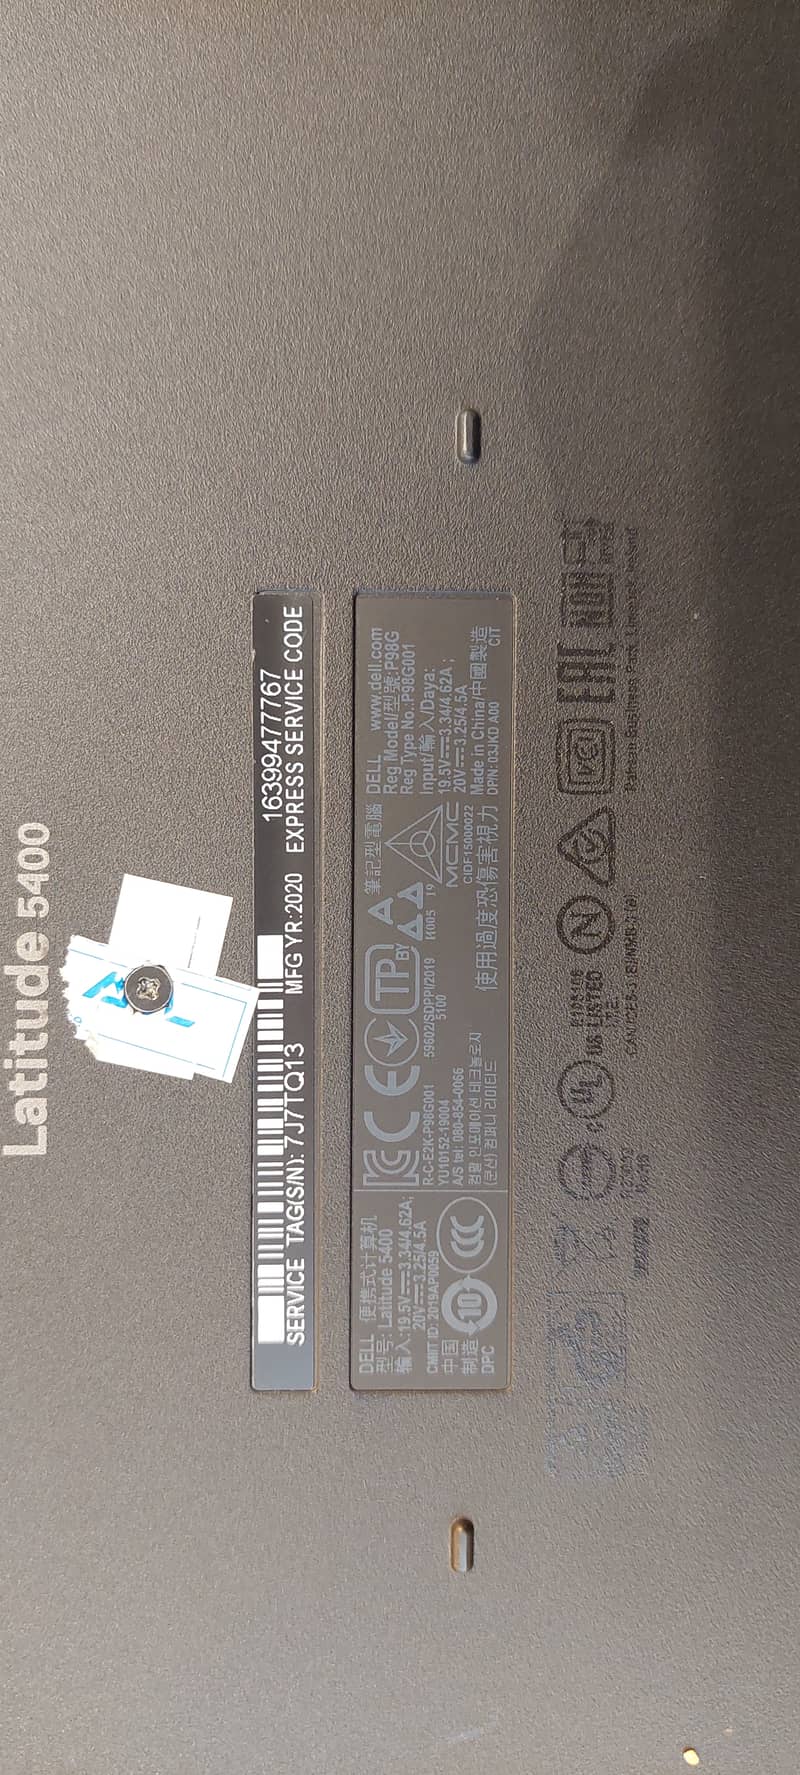 Dell Latitude 5400 i5 8th generation 8gb ram 256gb rom 10/10 condition 12